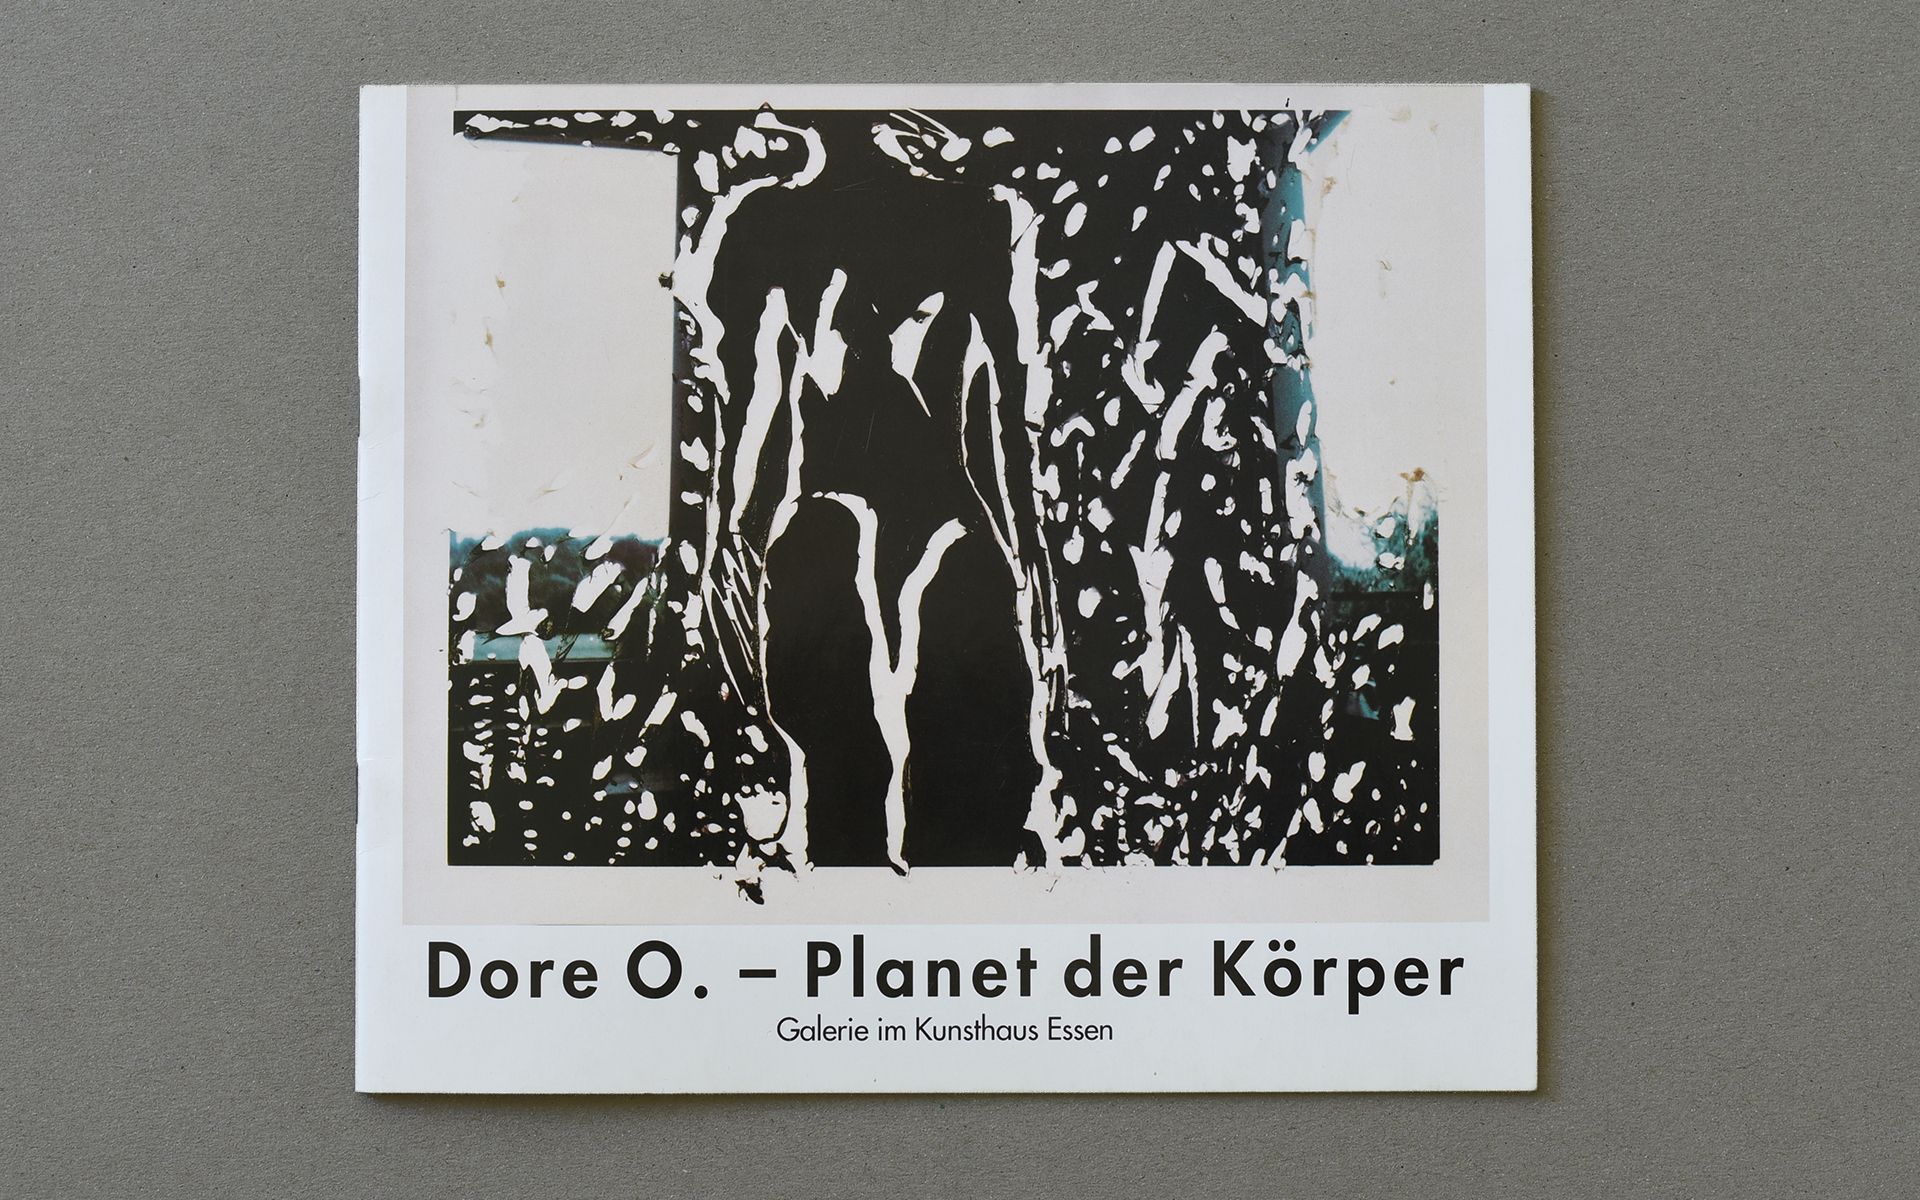 Katalog Dore O. - Planet der Körper